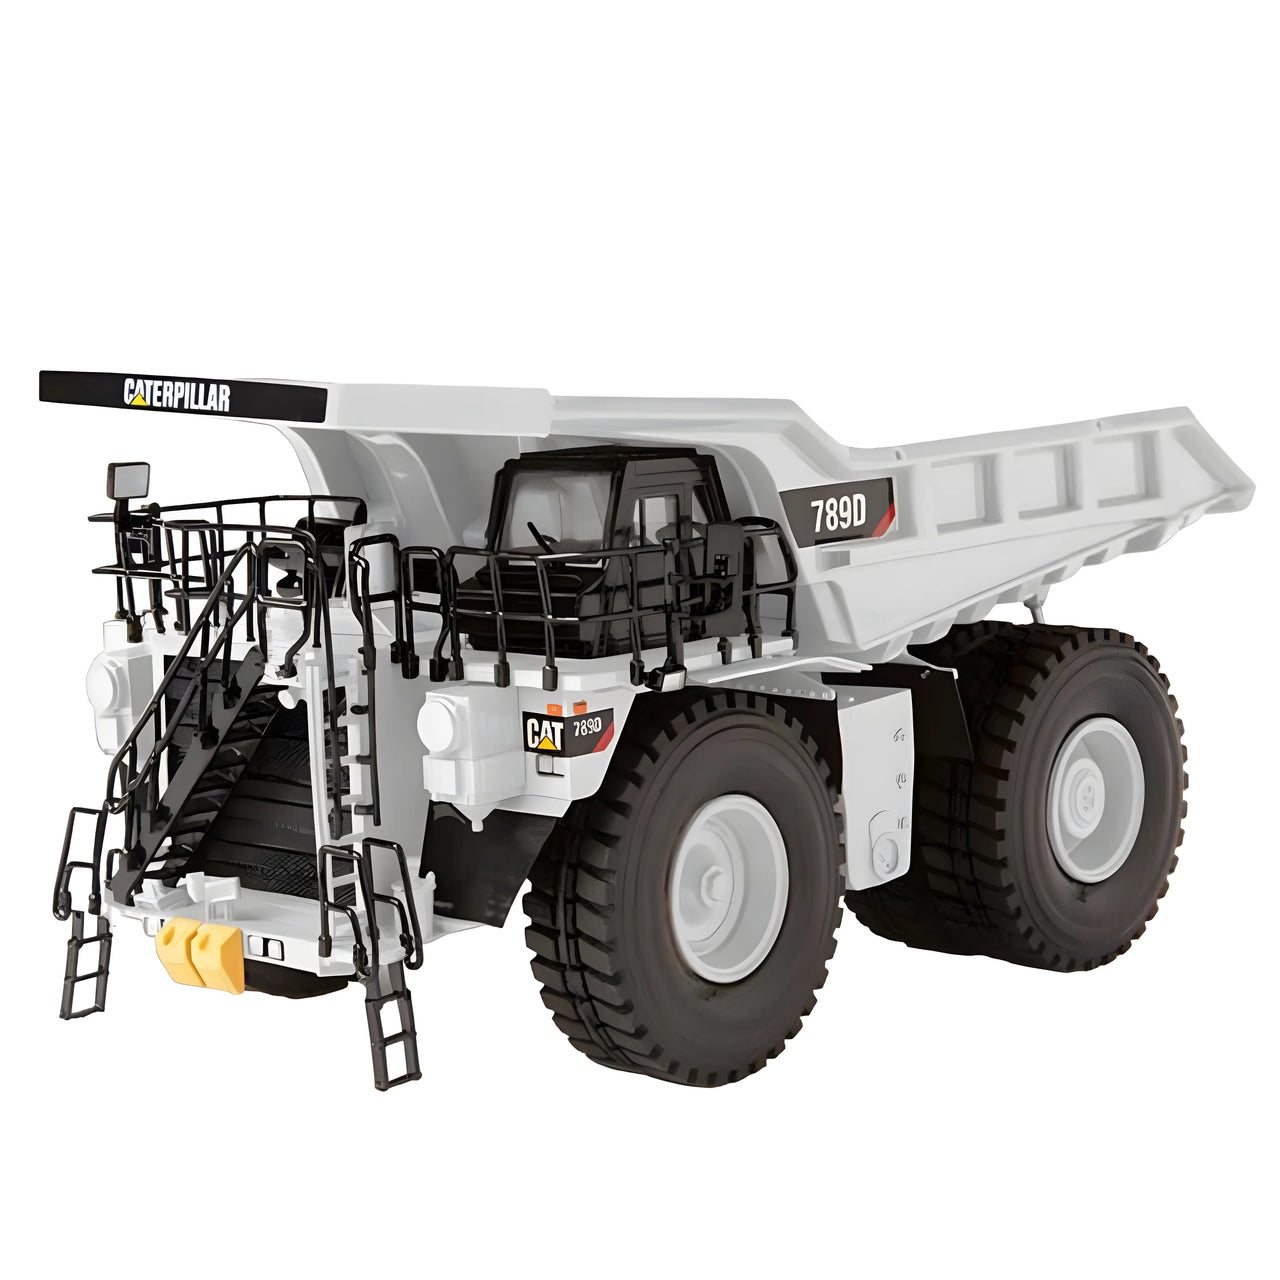 CCM789D-W Caterpillar 789D Mining Truck 1:87 Scale (Discontinued Model)